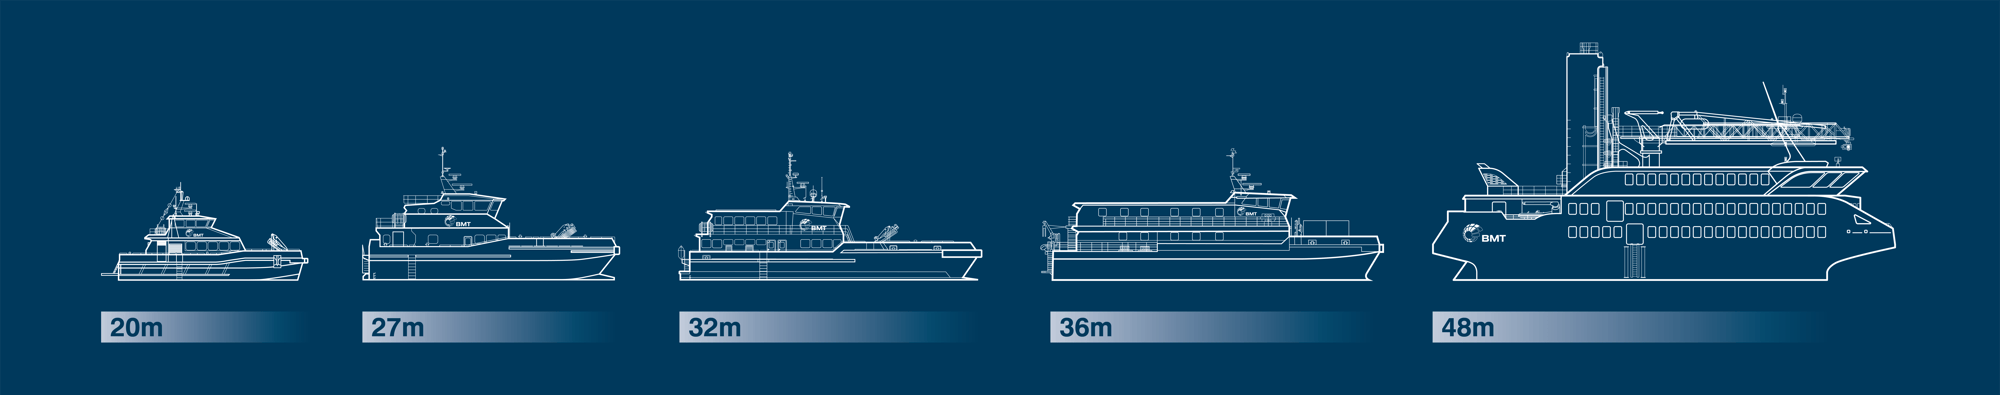 20-48m Vessels line up